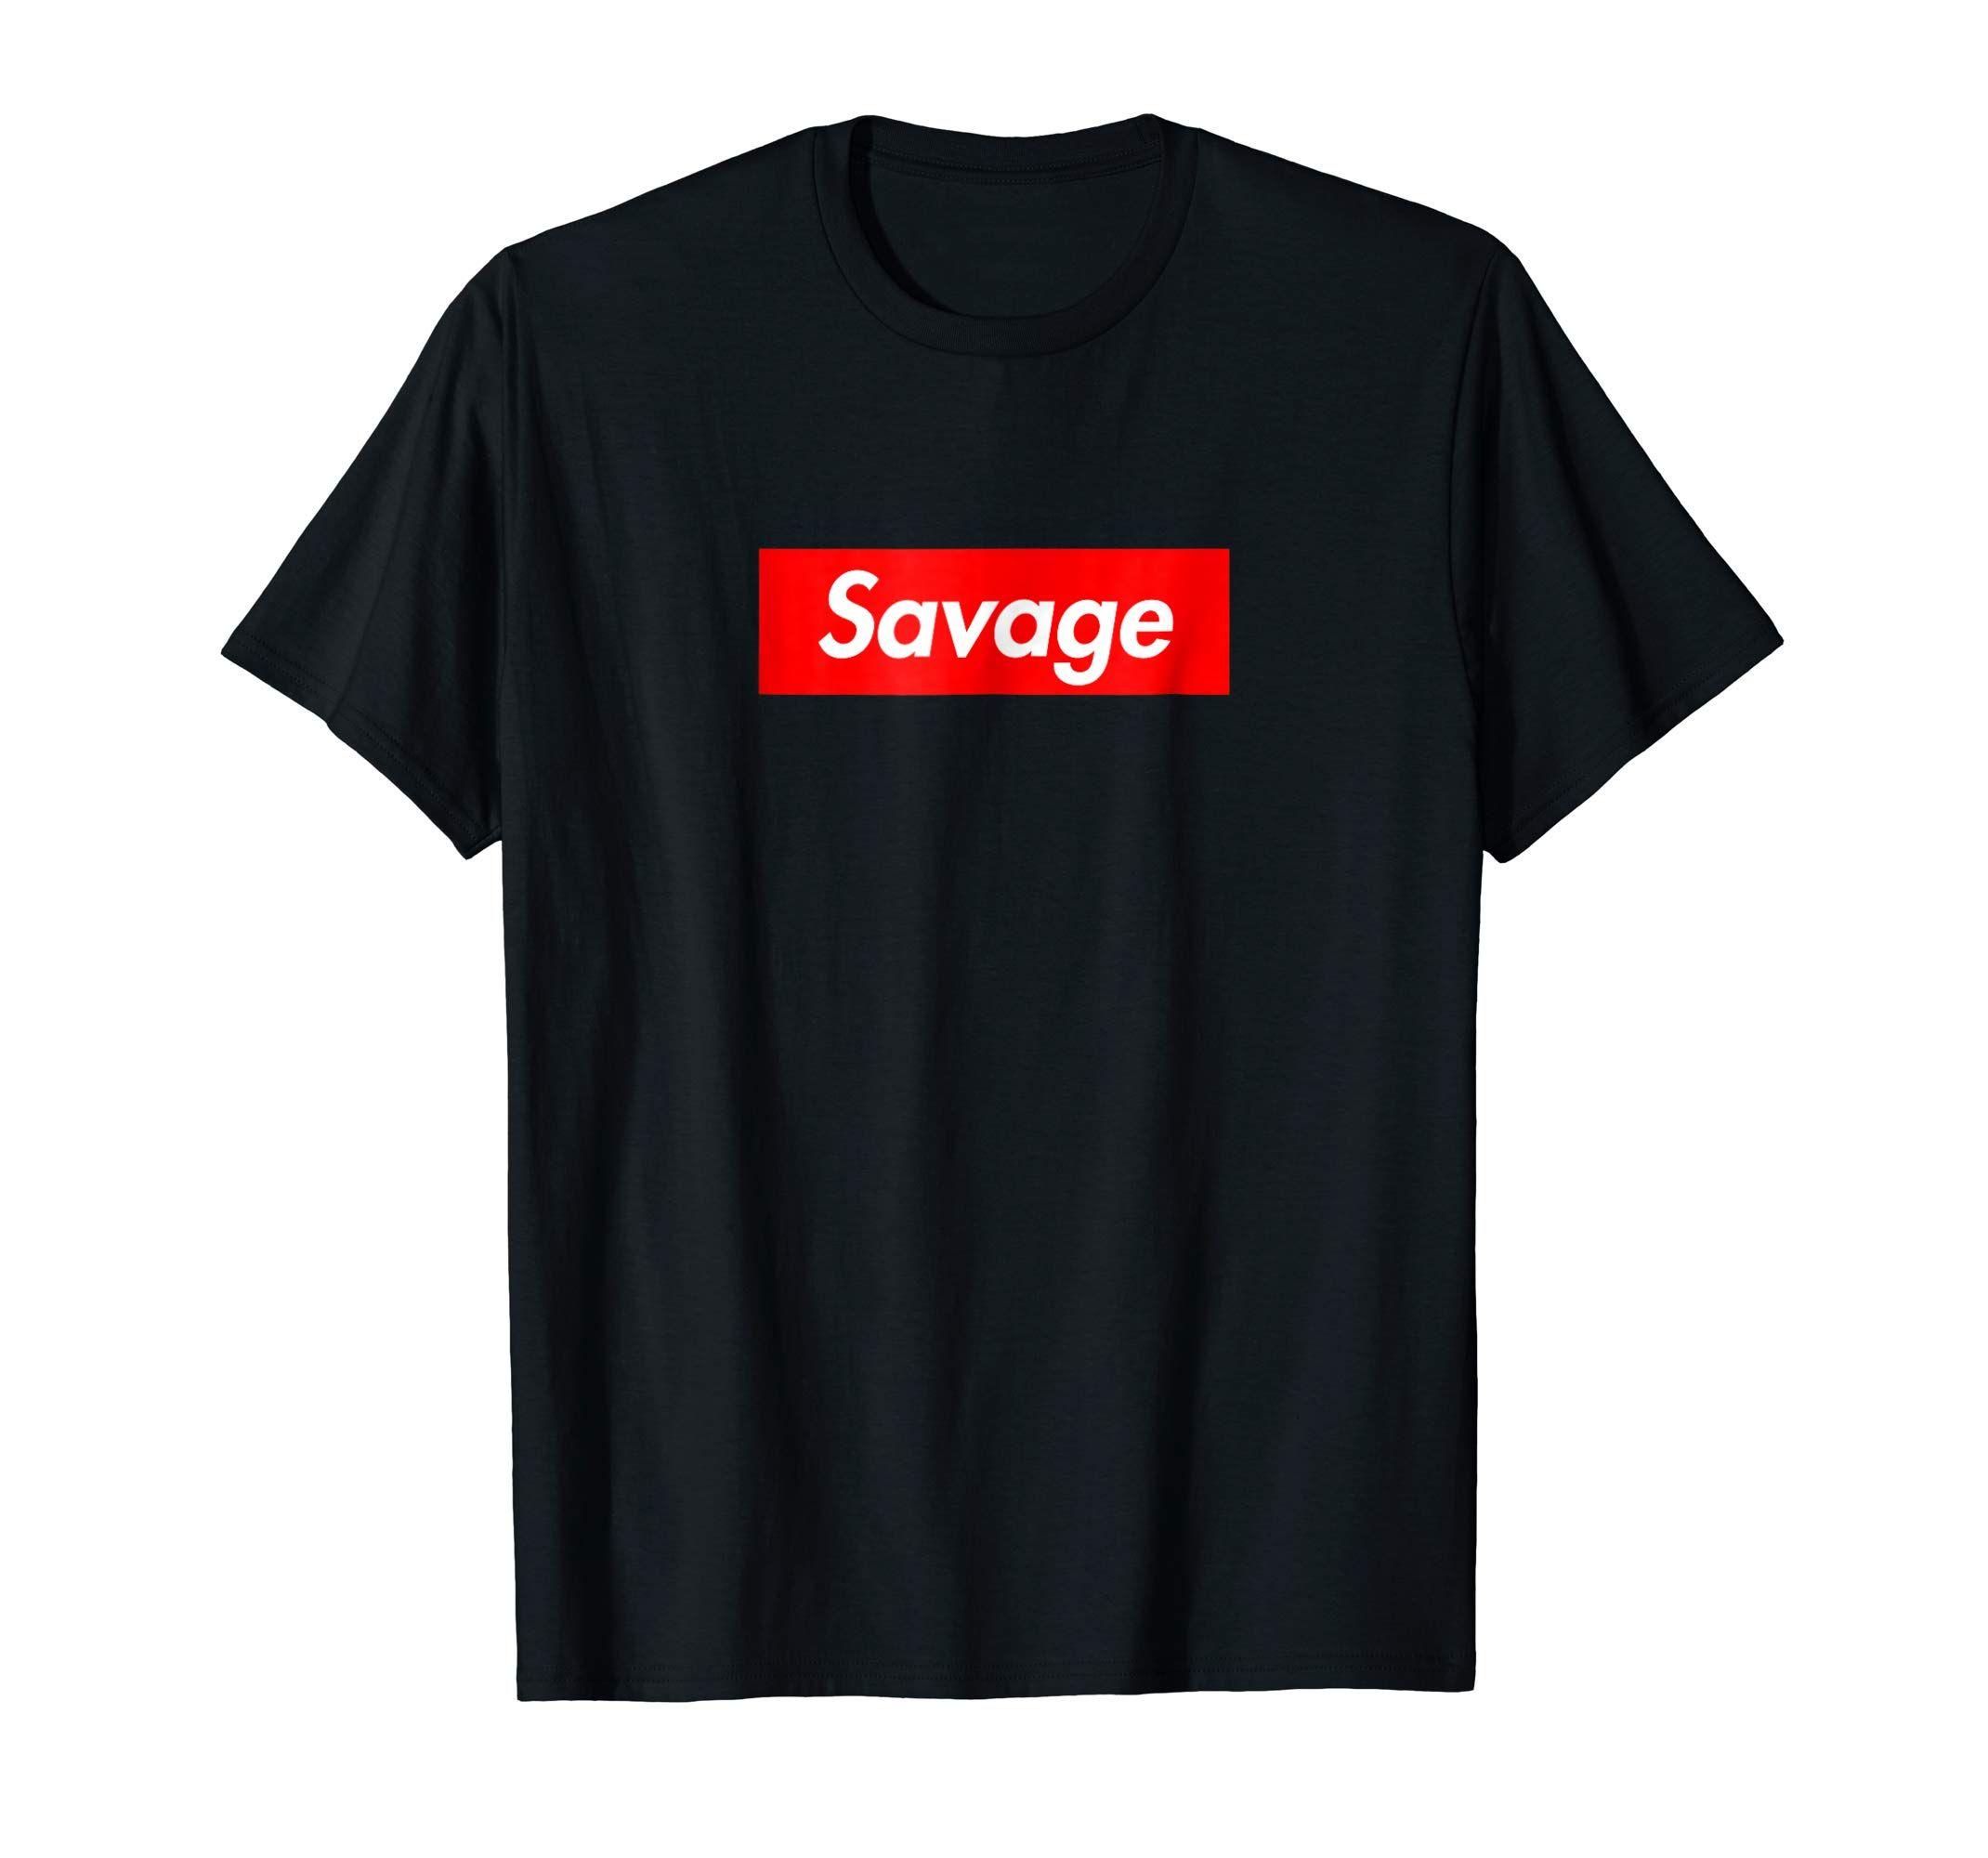 Red Savage Logo - Amazon.com: Savage T Shirt Cool Red box logo: Clothing